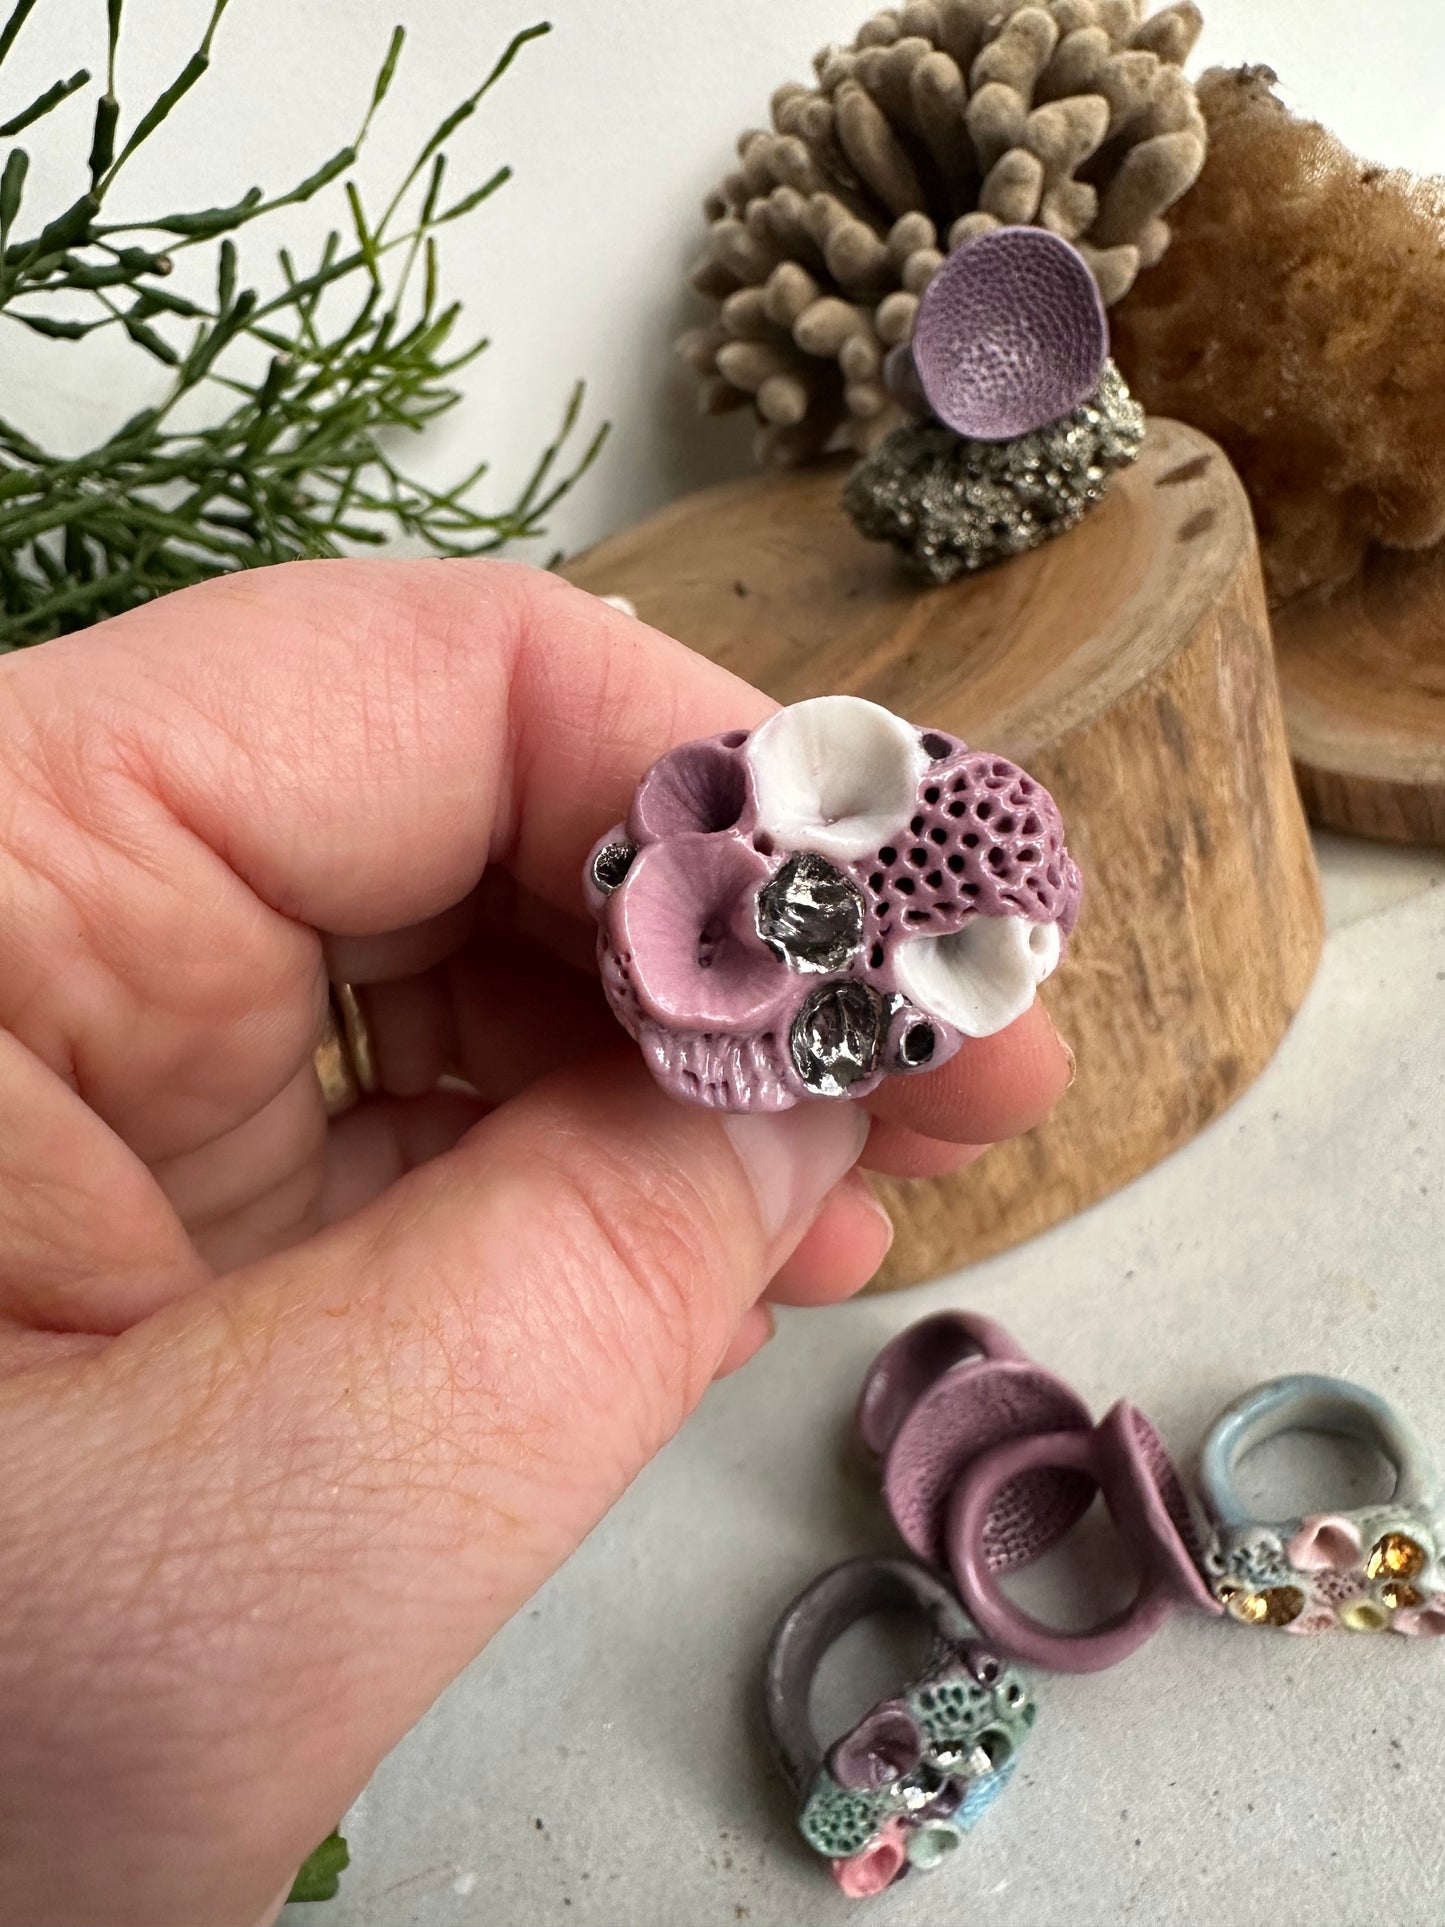 Handmade porcelain ‘rock coral’ rings, purples/ pinks